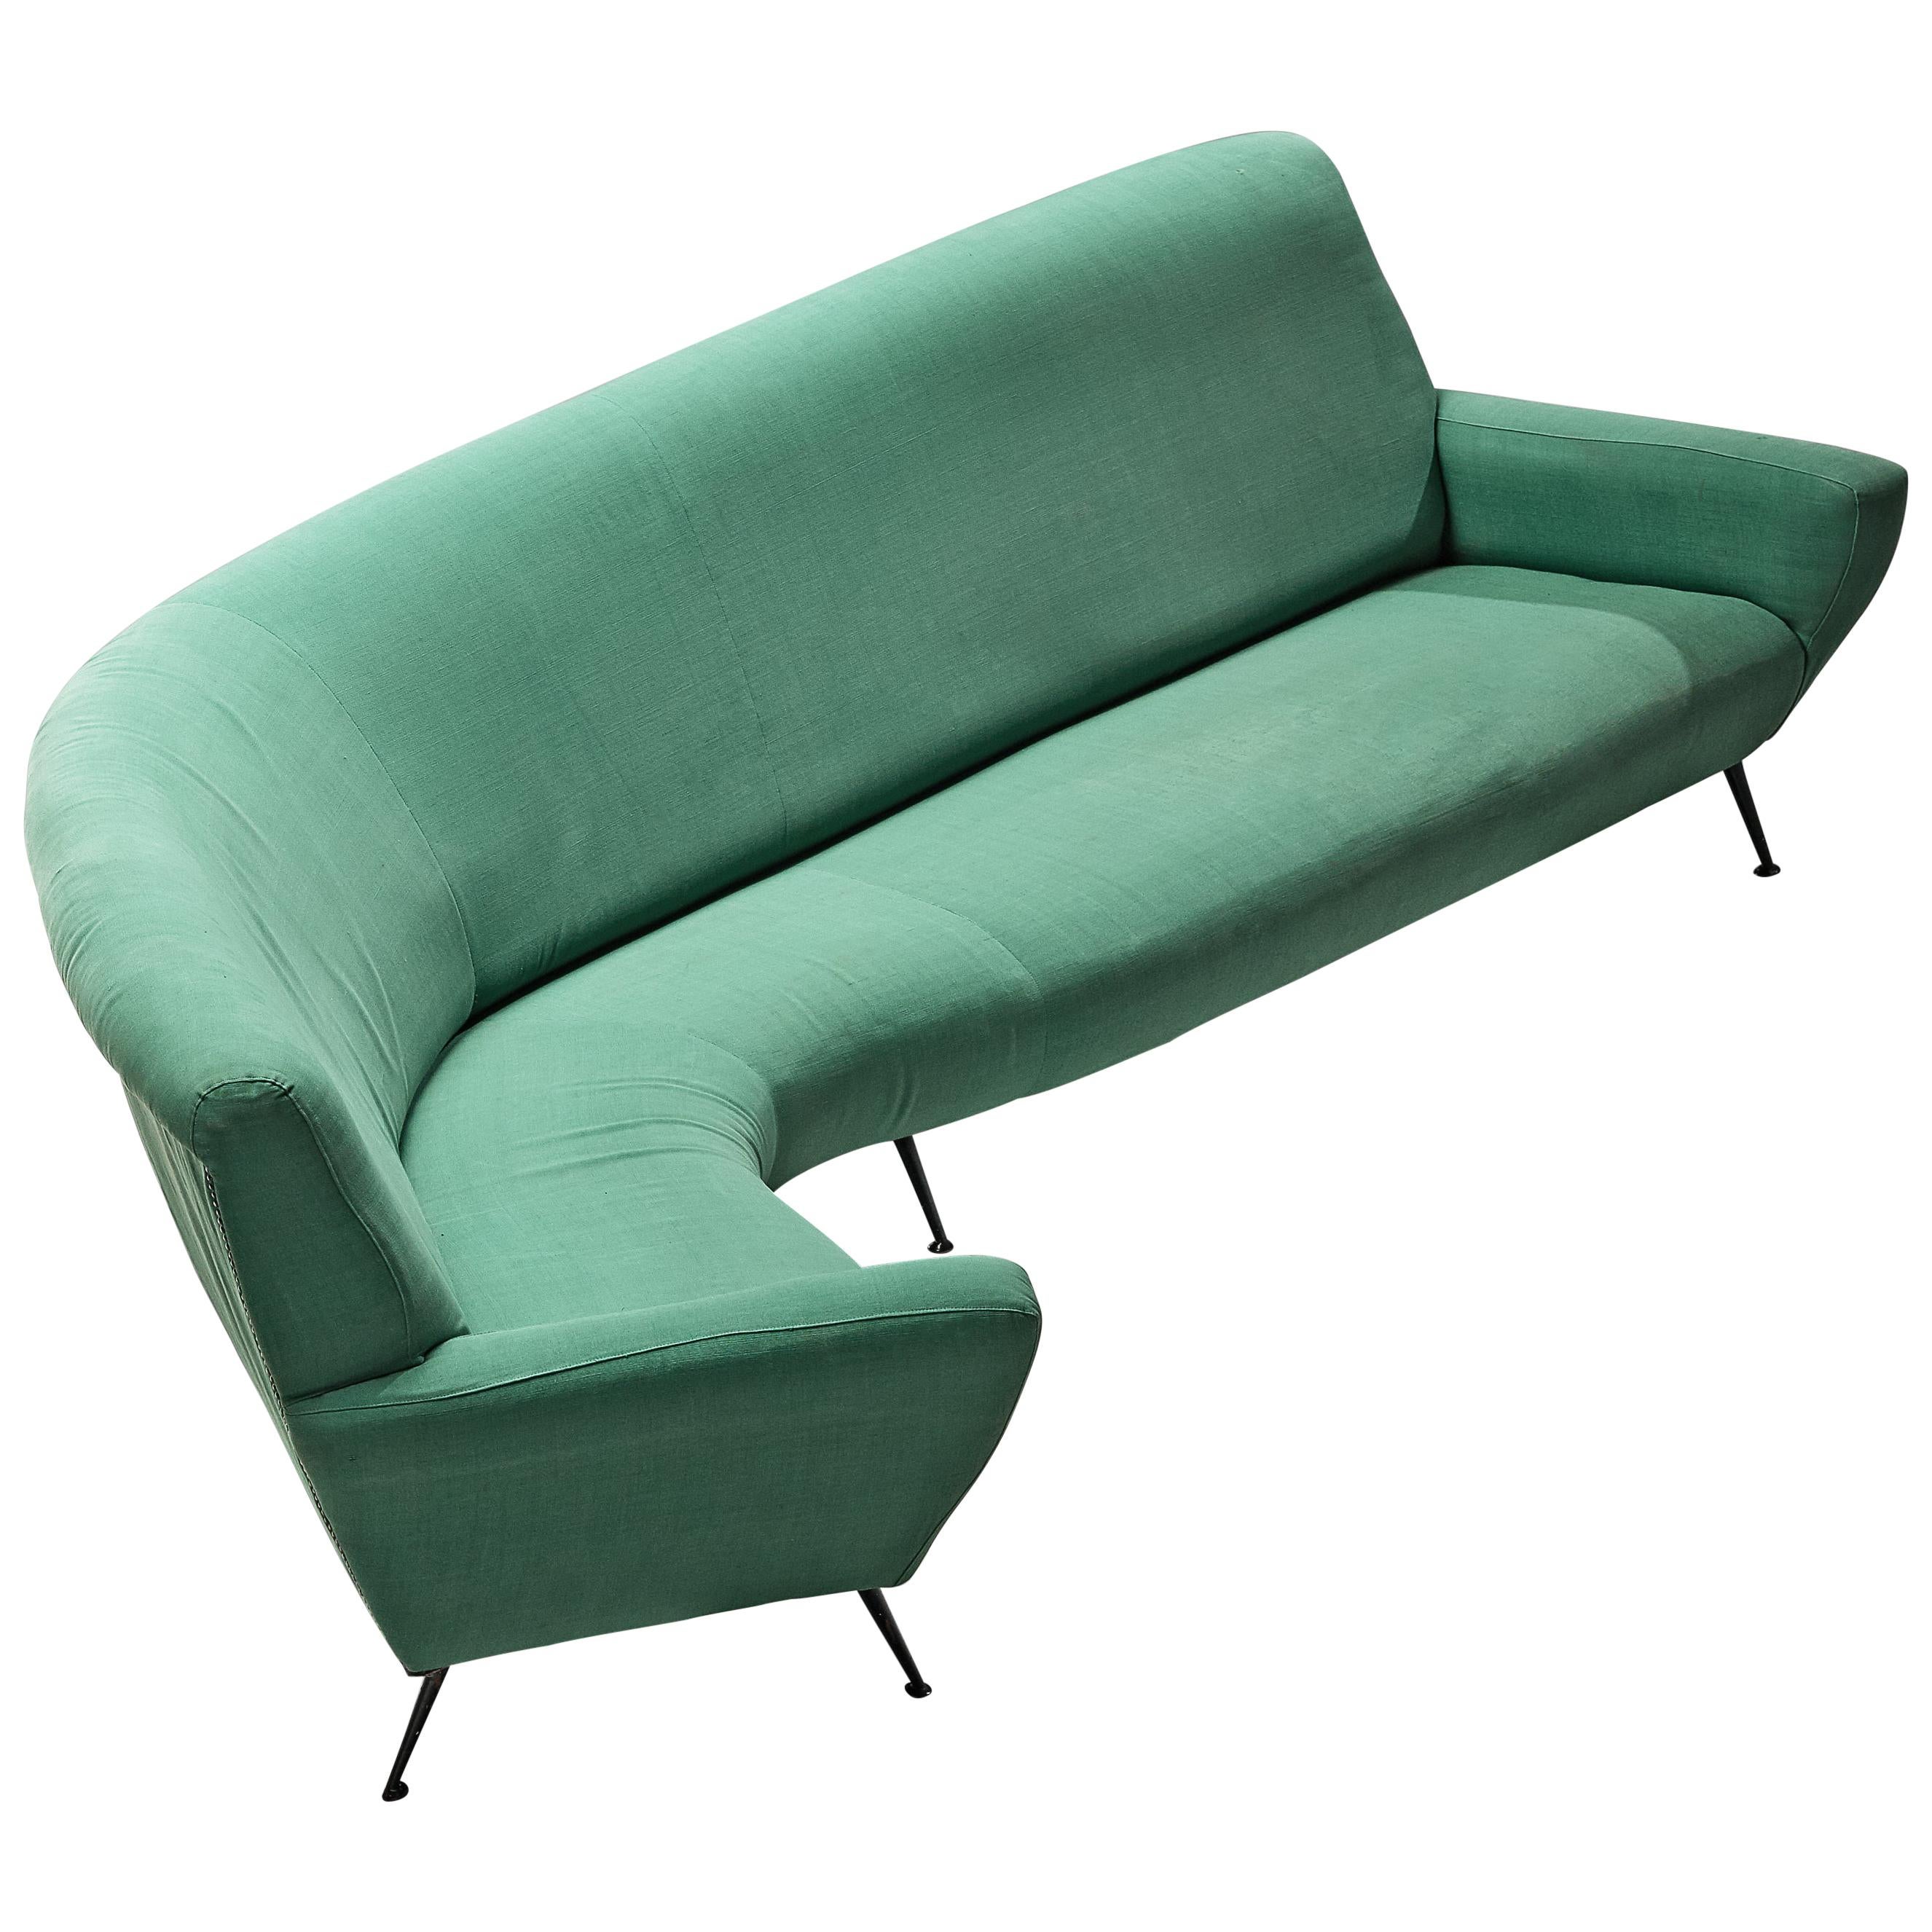 Gigi Radice for Minotti Curved Sofa in Green Upholstery